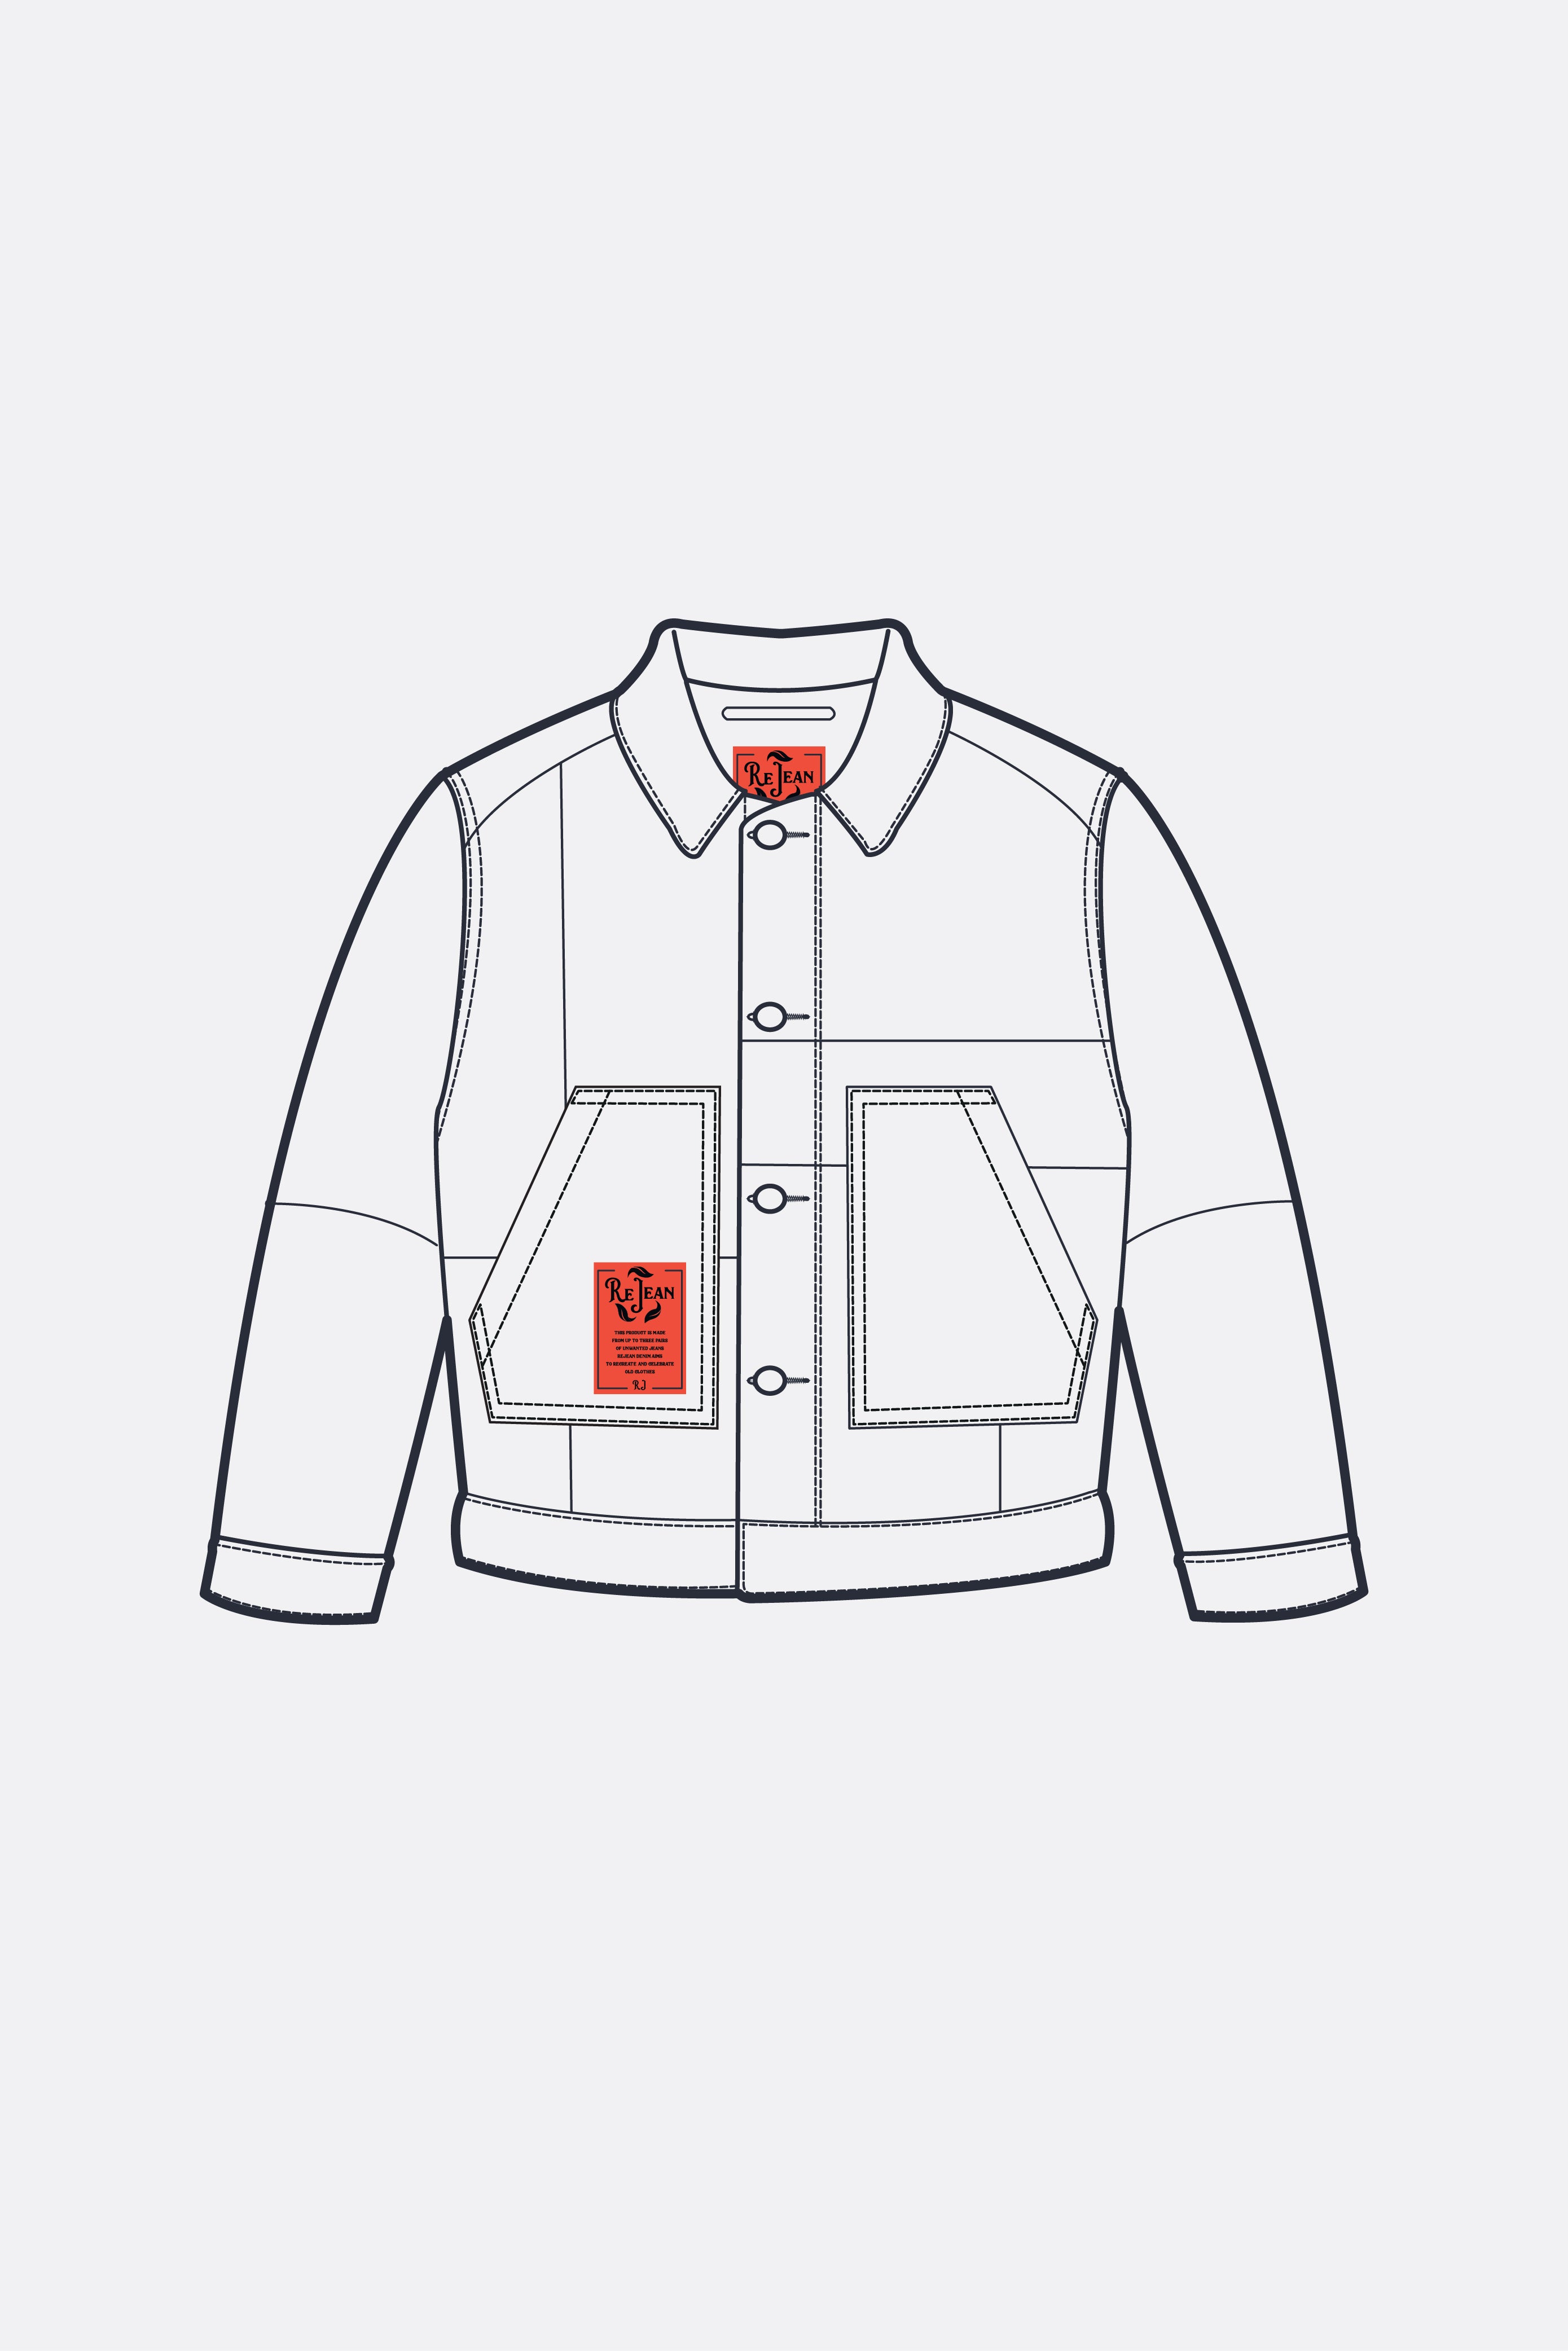 Tron Classic Carpenter Jacket in Patchwork Denim - ReJean Denim - zero waste - circular fashion brand 